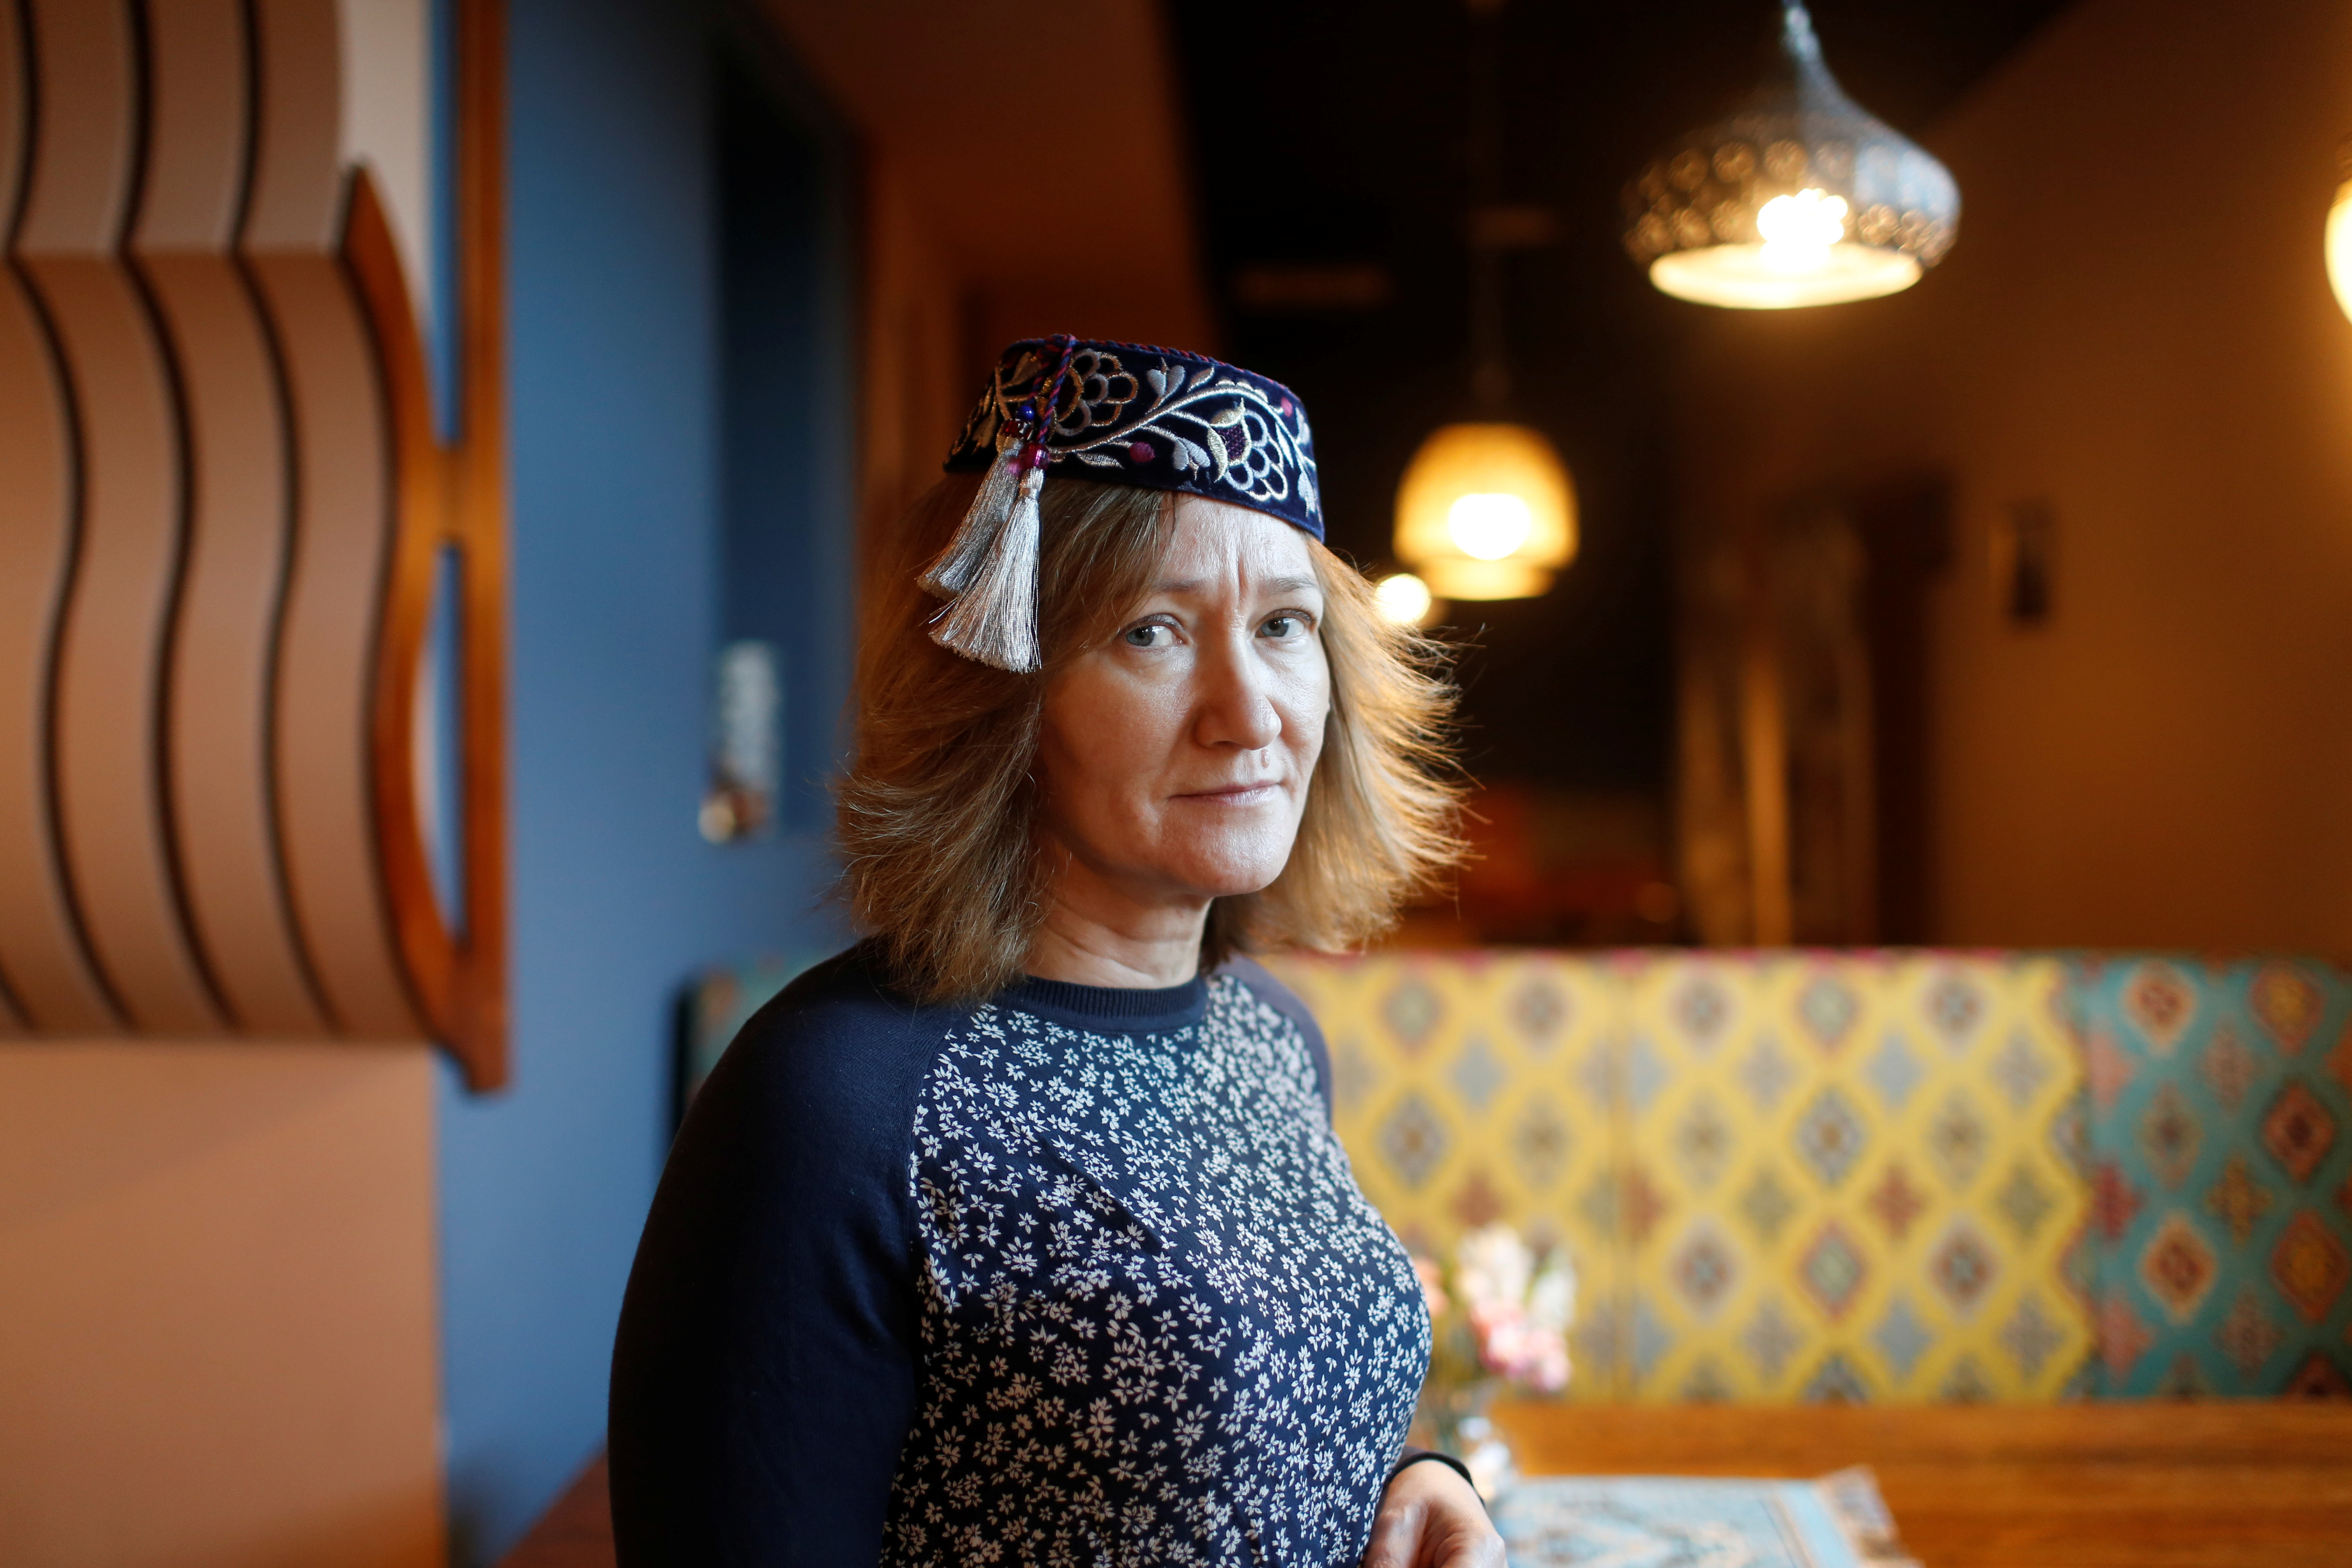 Muslim Tatar restaurant near the Polish border attempts to break barriers, in Bialystok